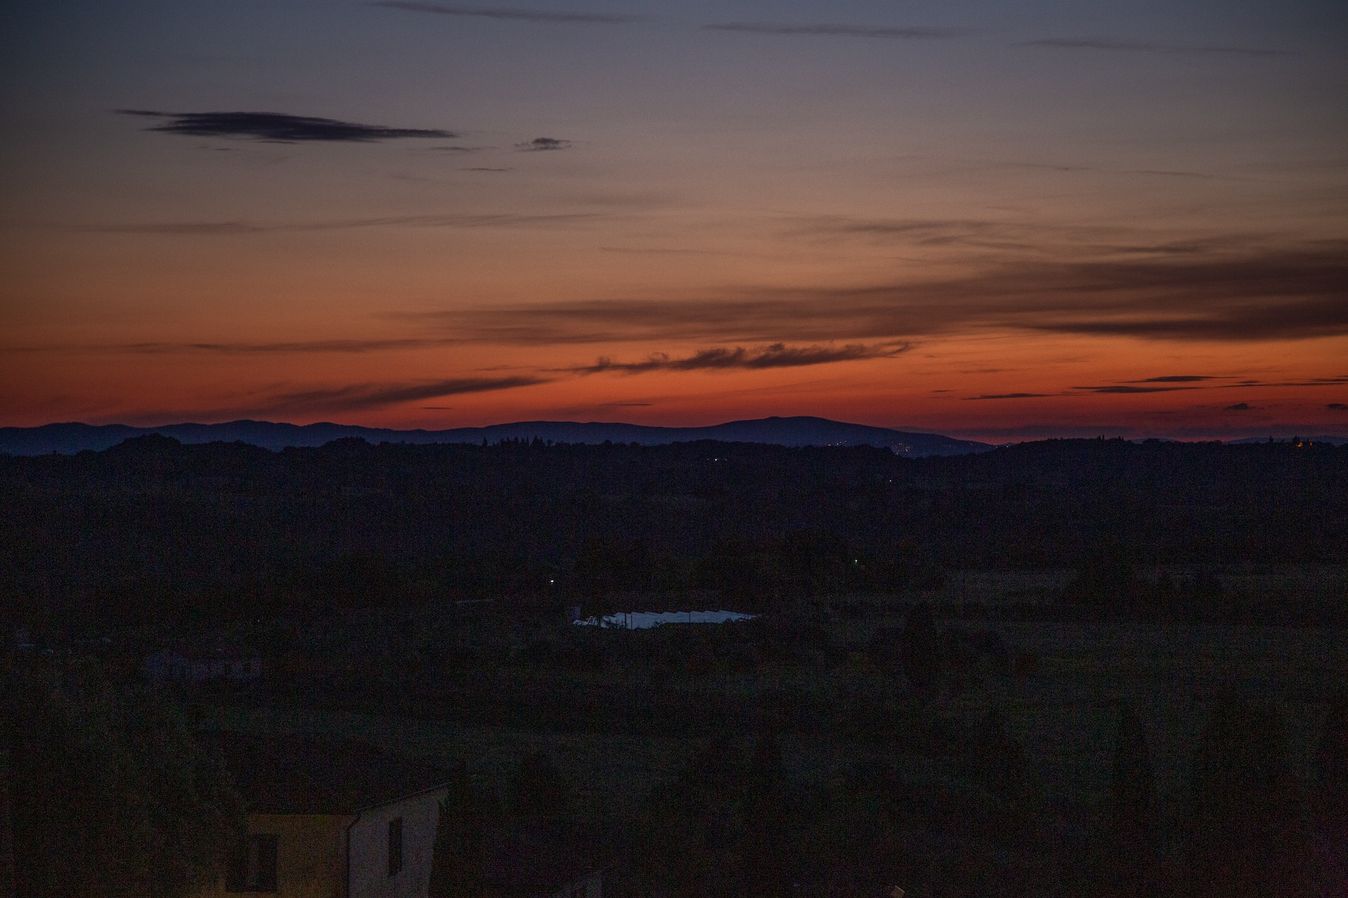 Fading light over Tuscany